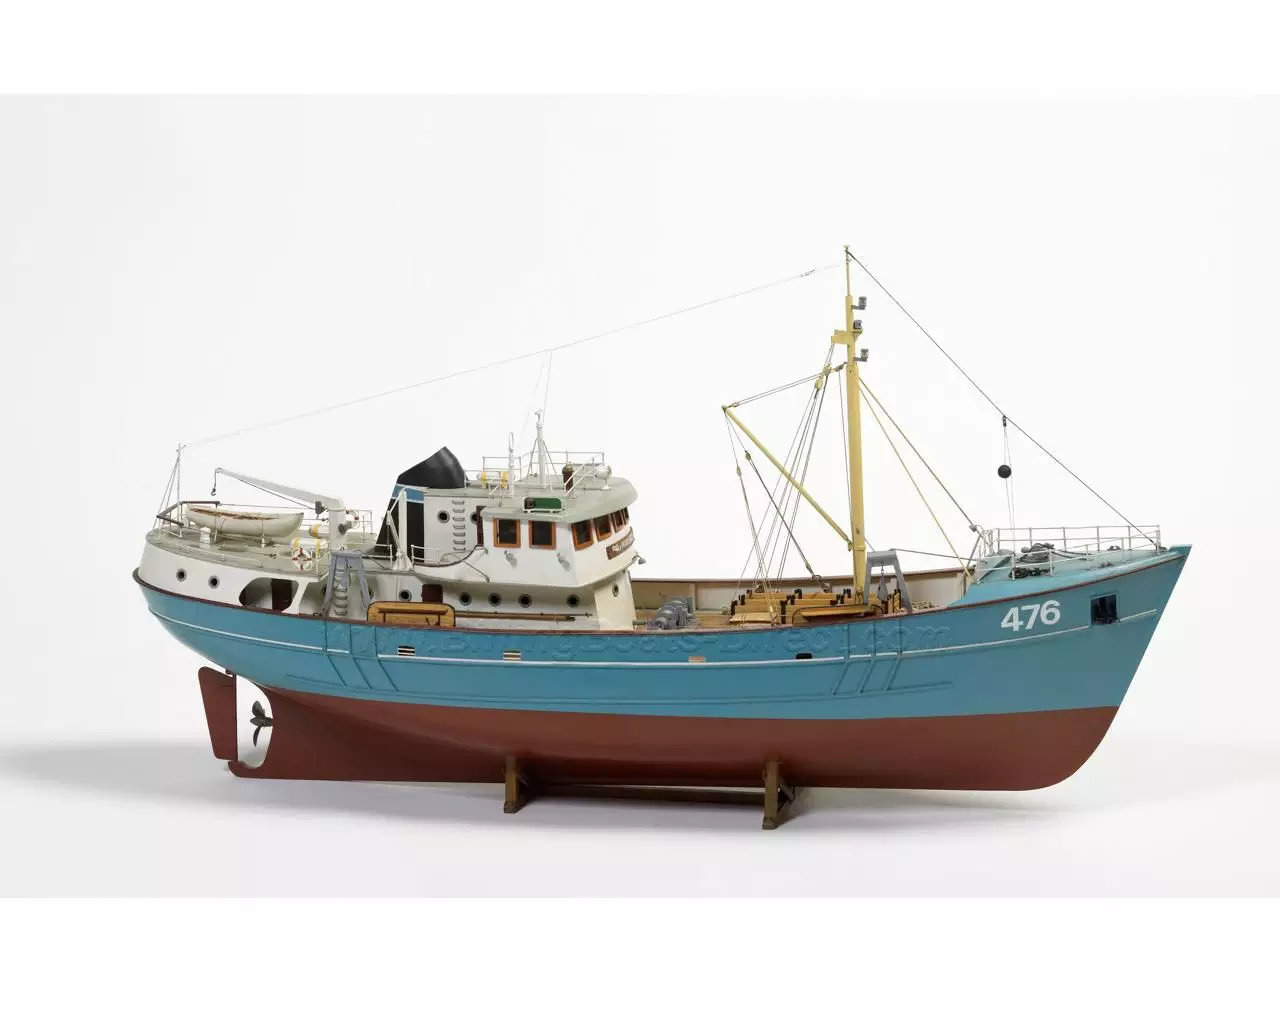 http://maquettedebateau.com/wp-content/uploads/sites/2/2019/04/795-7984-Nordkap-Model-Boat-Kit.jpg